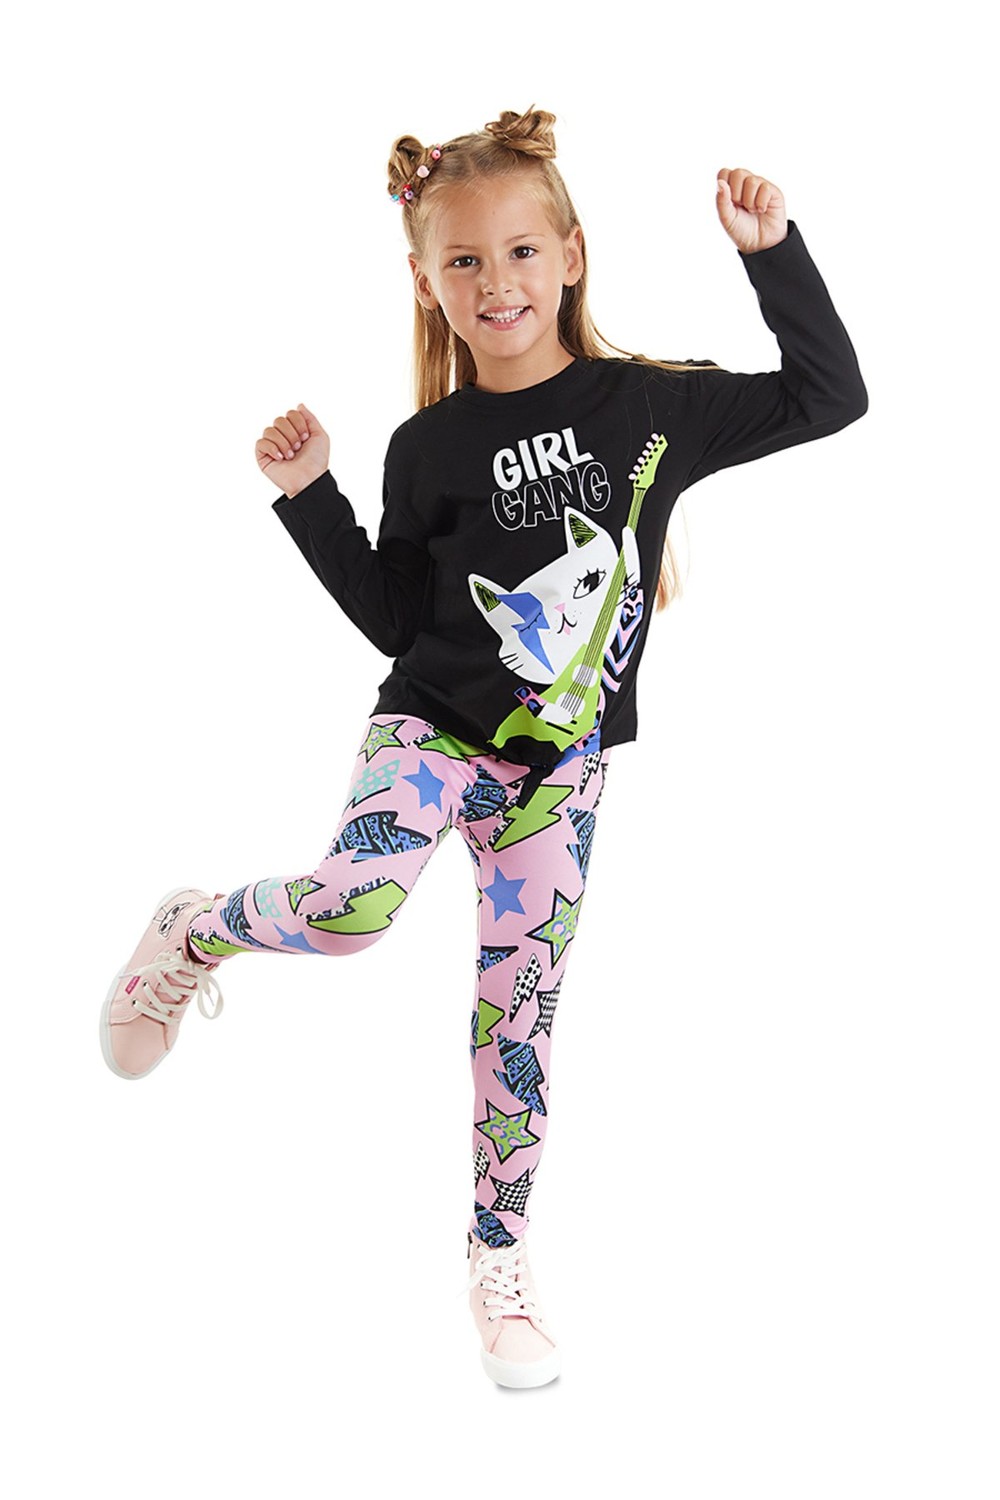 Mushi Girl Gang Girl's Black T-shirt with Pink Leggings Set.